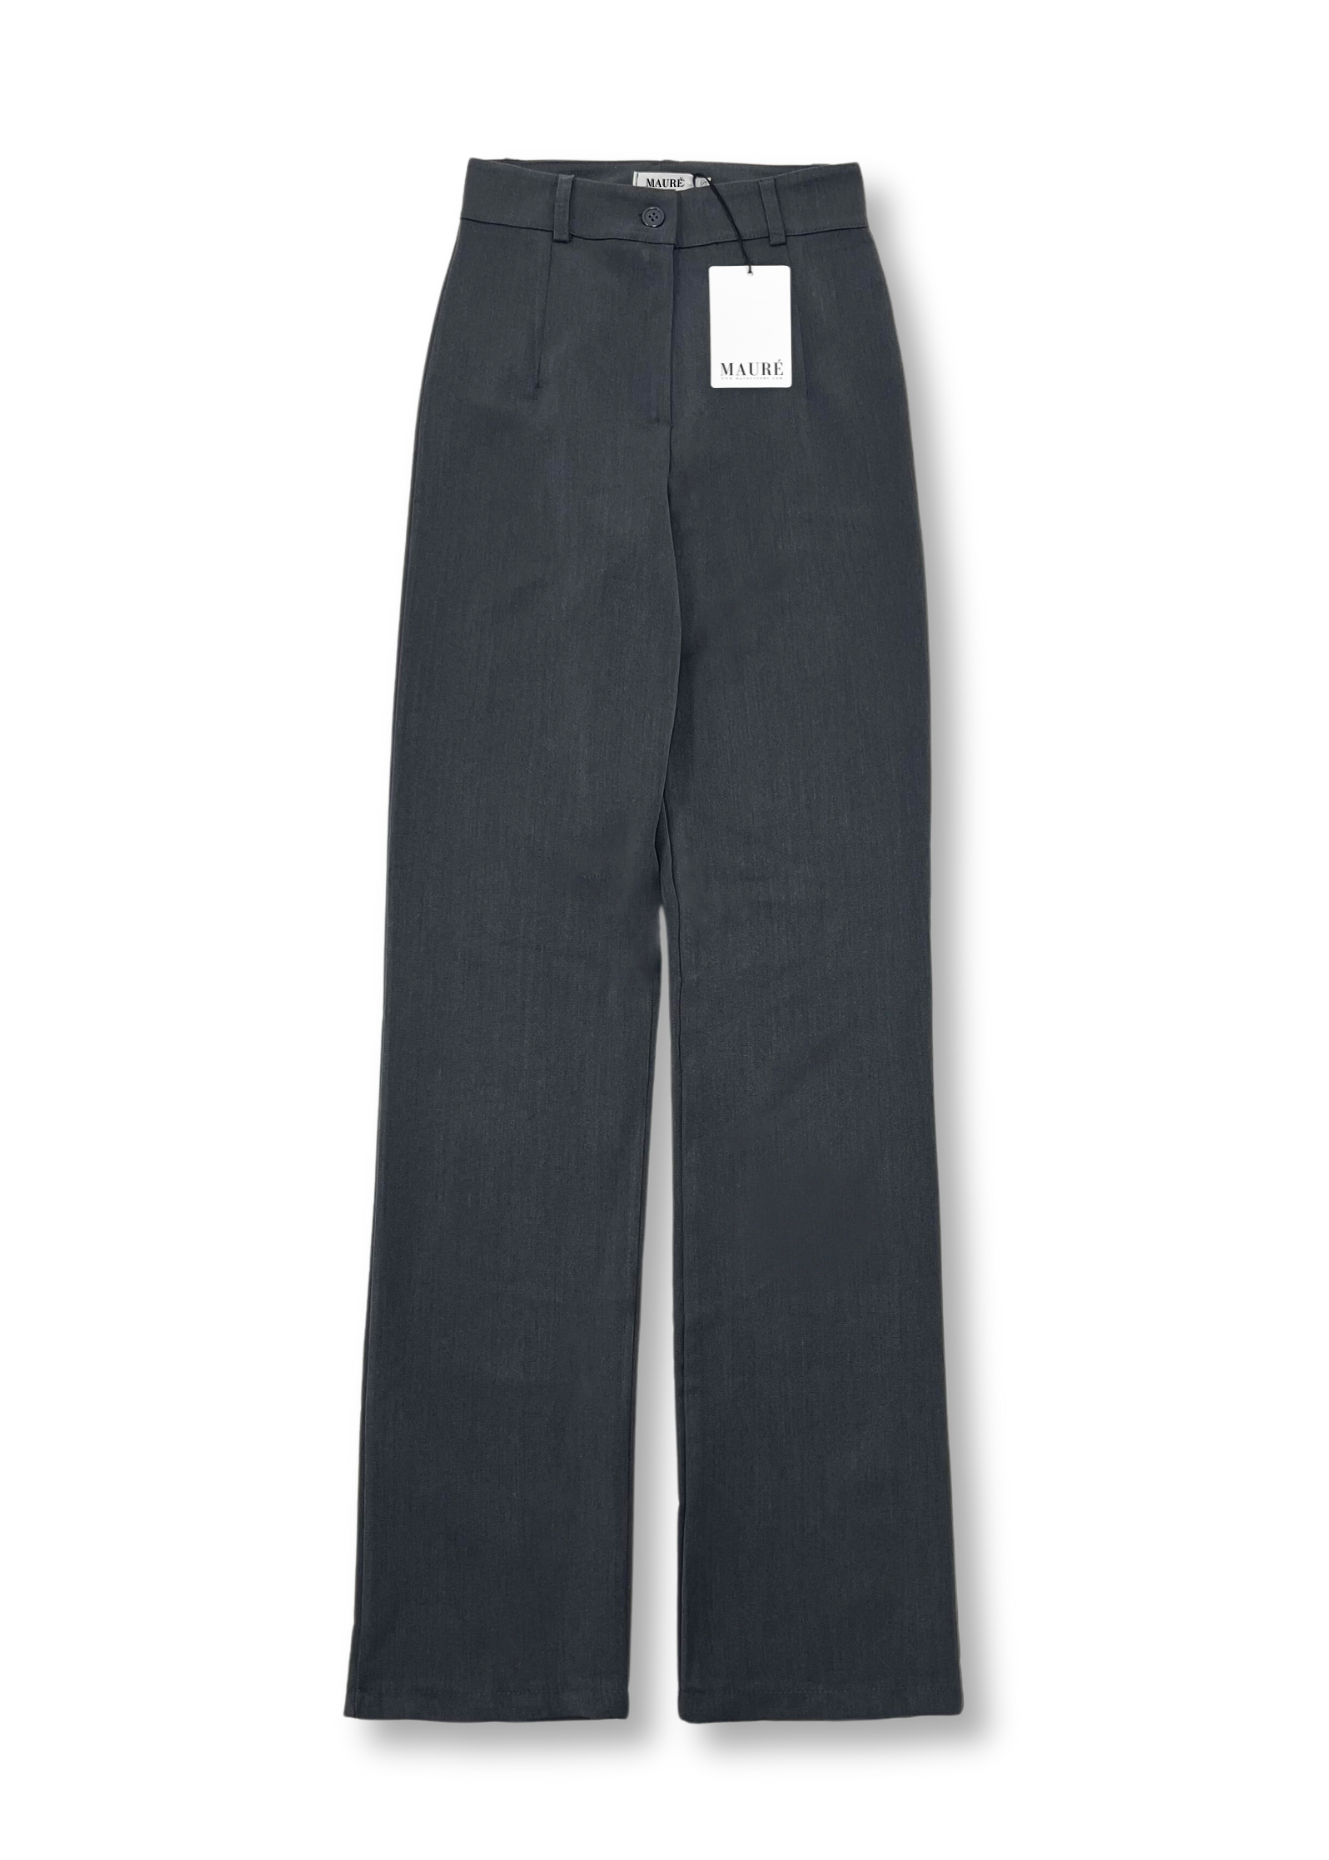 Straight leg pants classic dark washed grey (TALL)